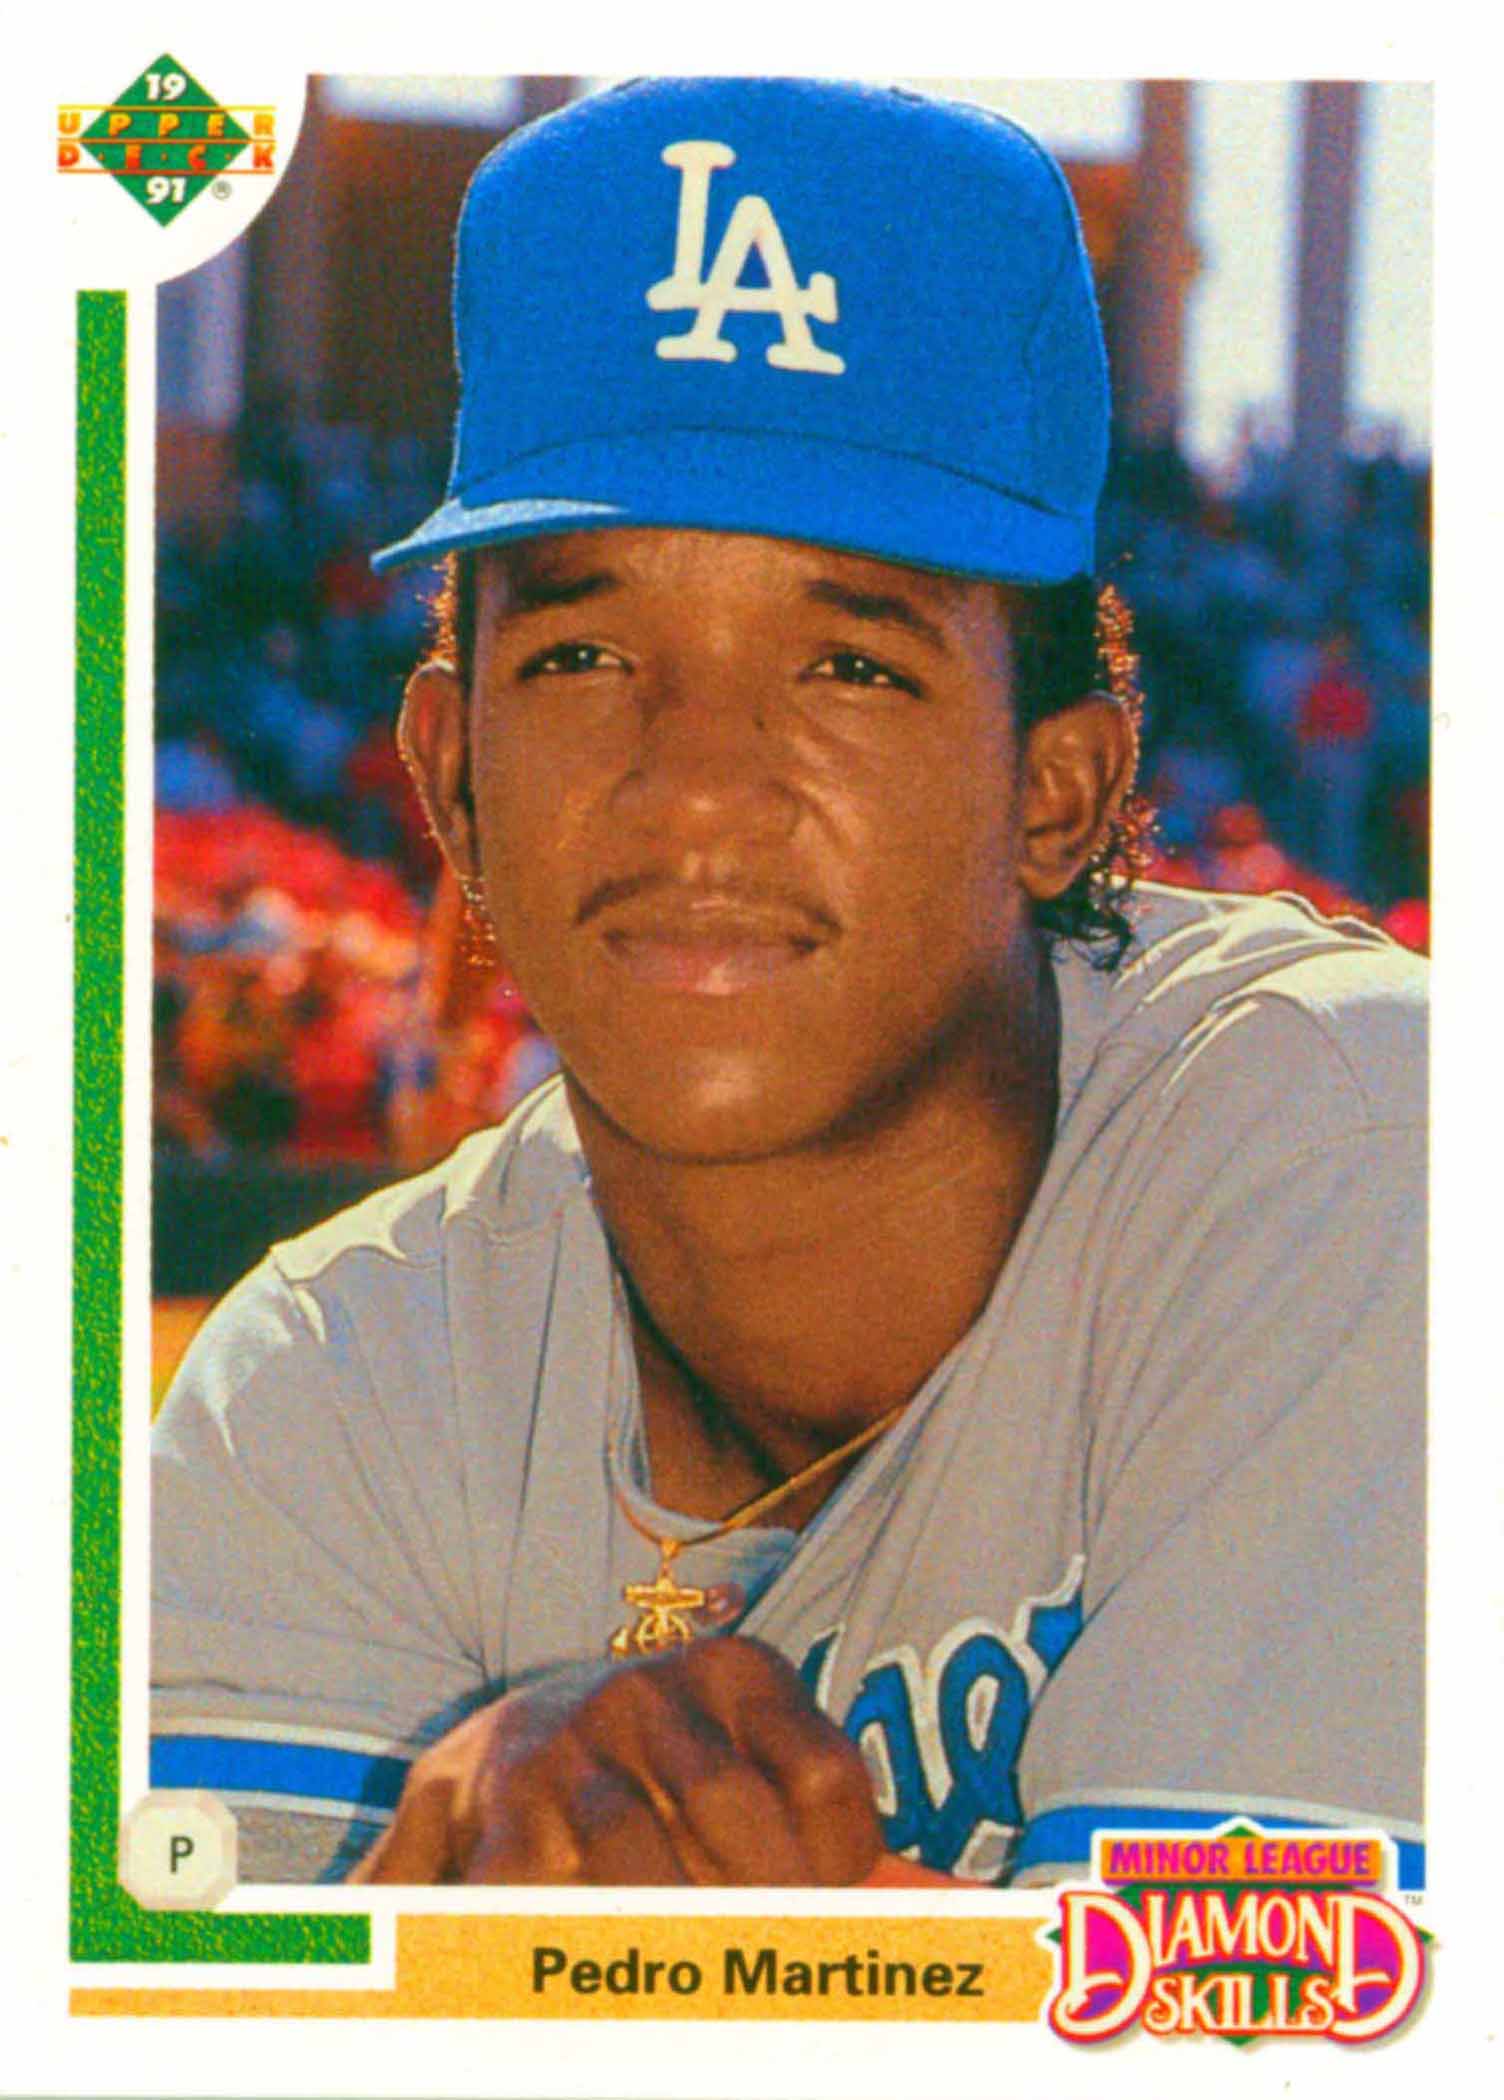  1993 Upper Deck - Pedro Martinez - Baseball Rookie